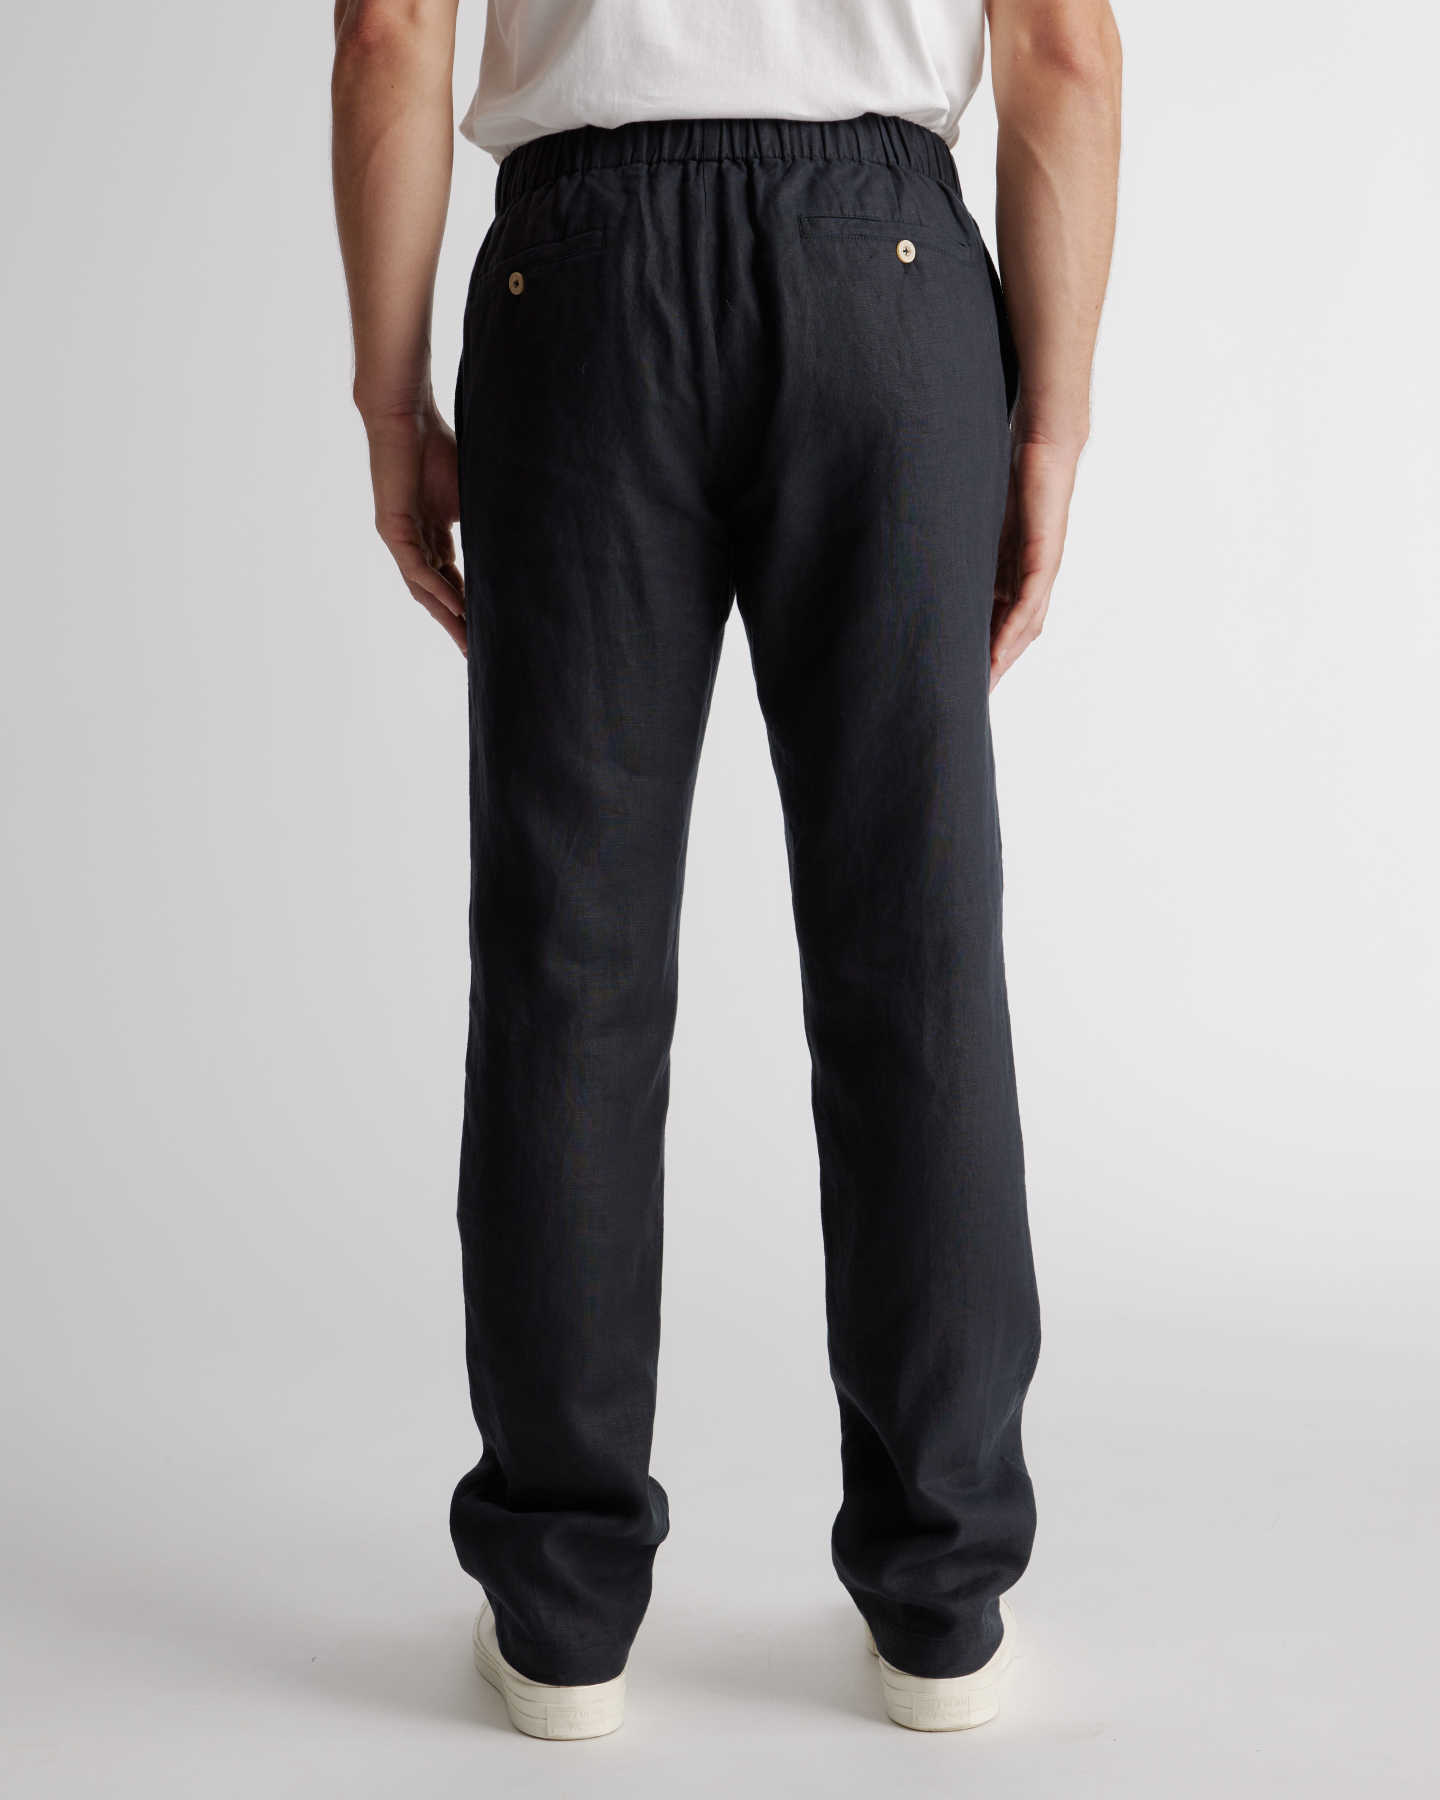 100% European Linen Pants - Black - 6 - Thumbnail